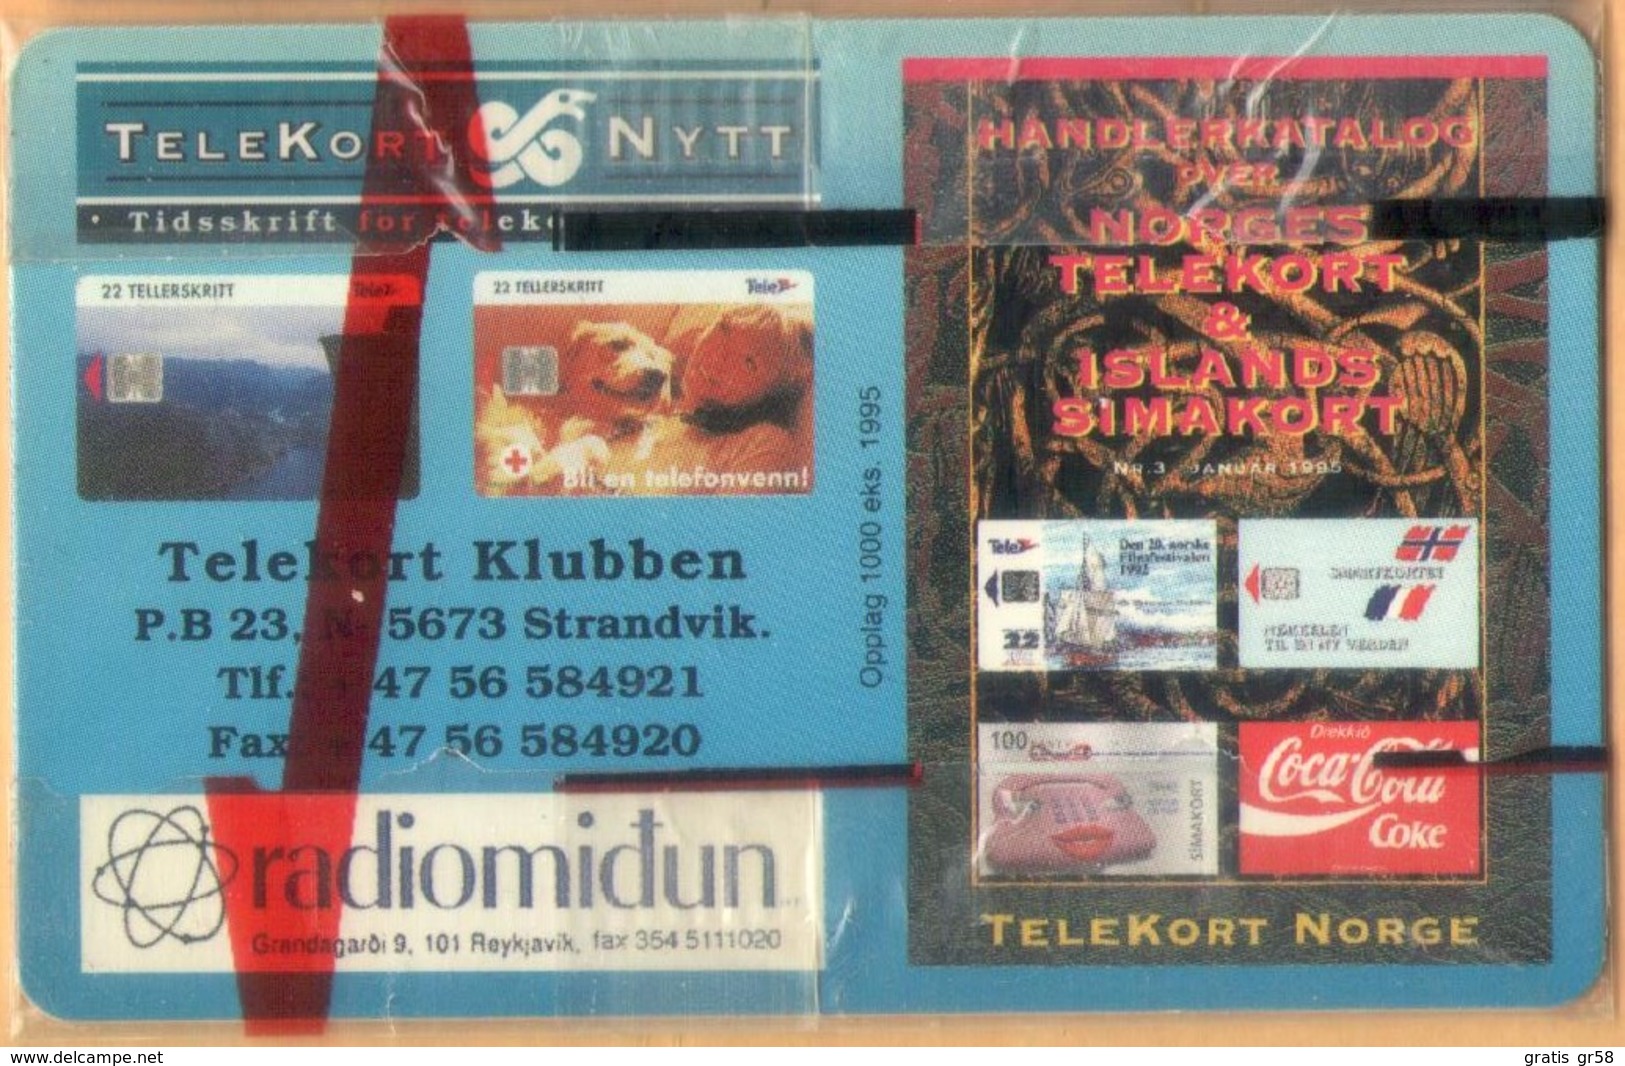 Iceland - ICE-P-1, Radomidun, TeleKort Norge - Astronaut, Coca Cola, 100U, 1,000ex, 1995, Mint NSB - IJsland